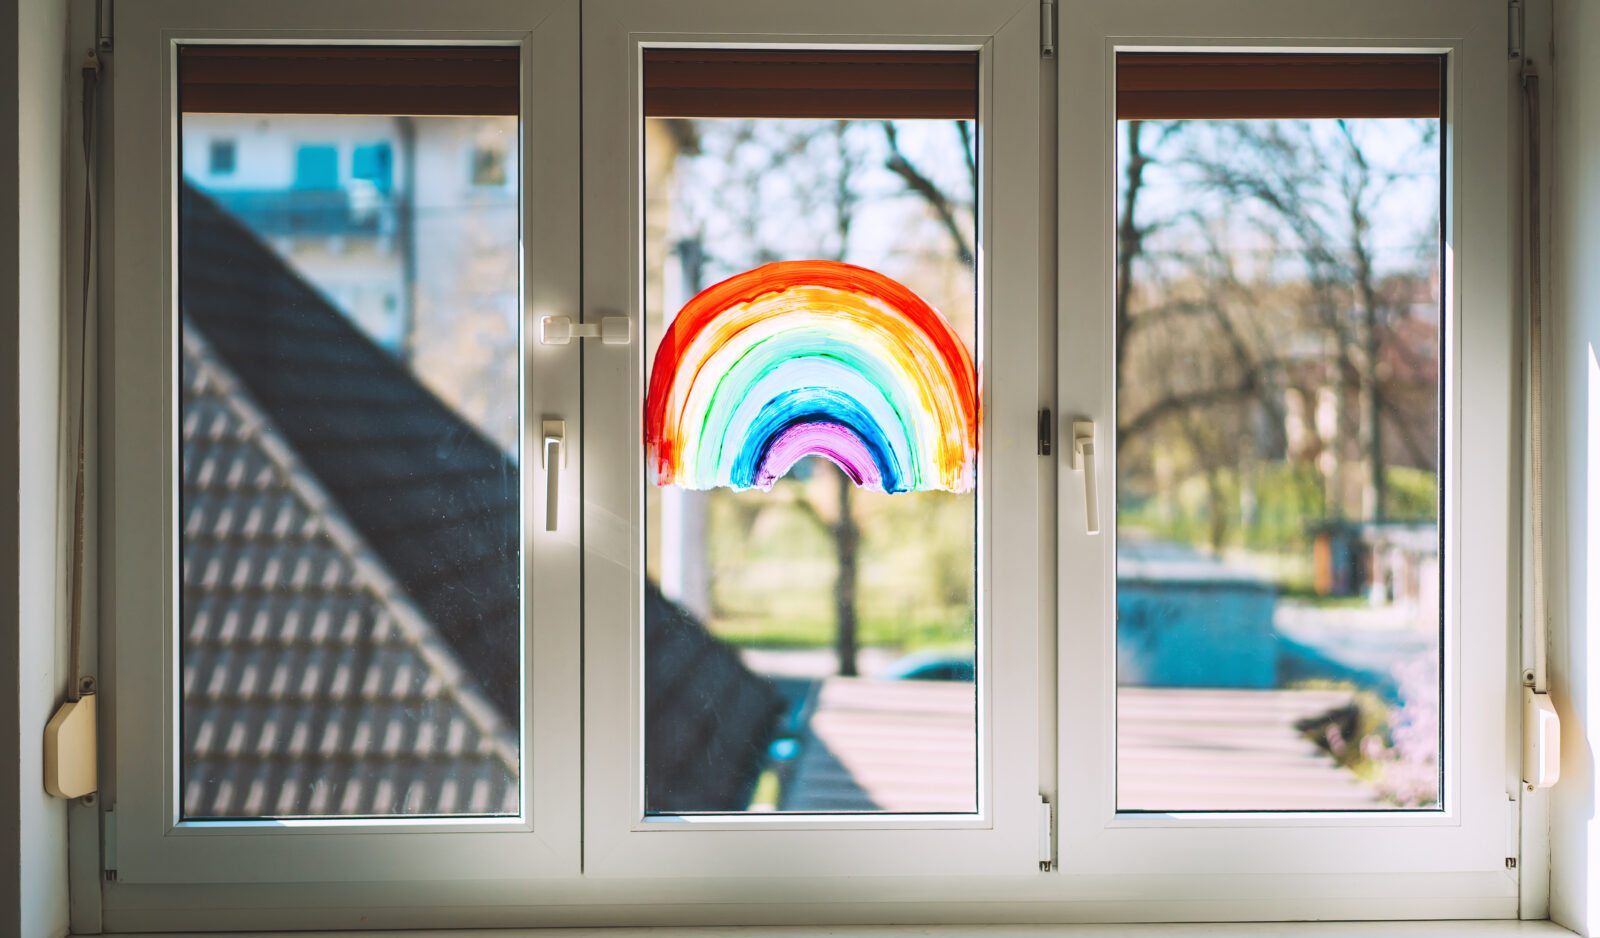 Rainbow Painted on Childcare Center Door